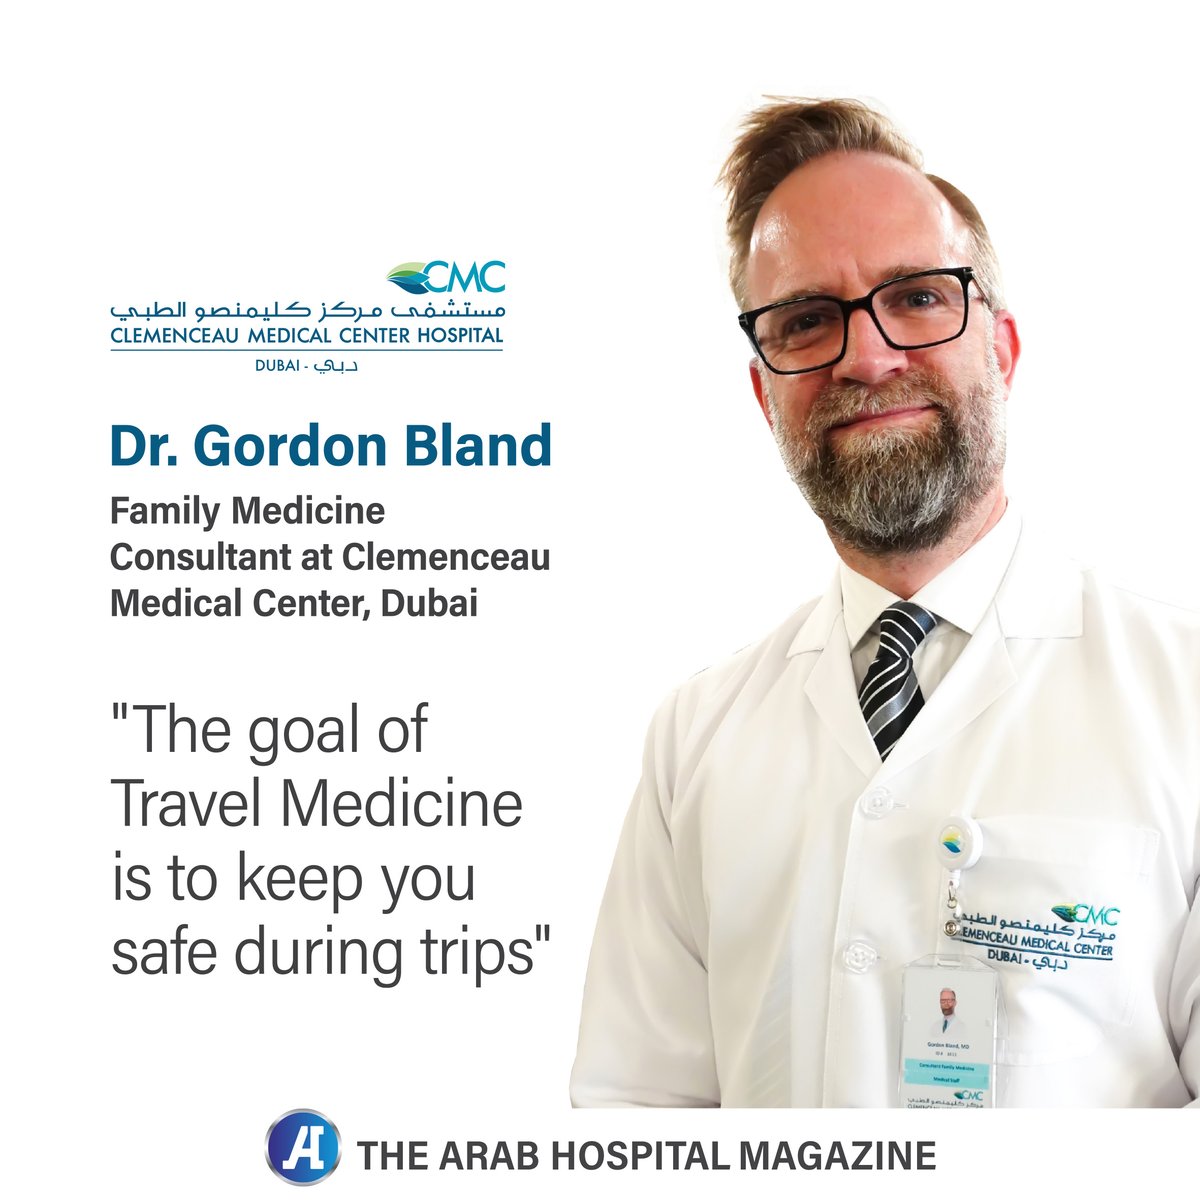 @cmc_dubai  #TravelMedicine
Full interview: hospitalsmagazine.com/interviews/int…